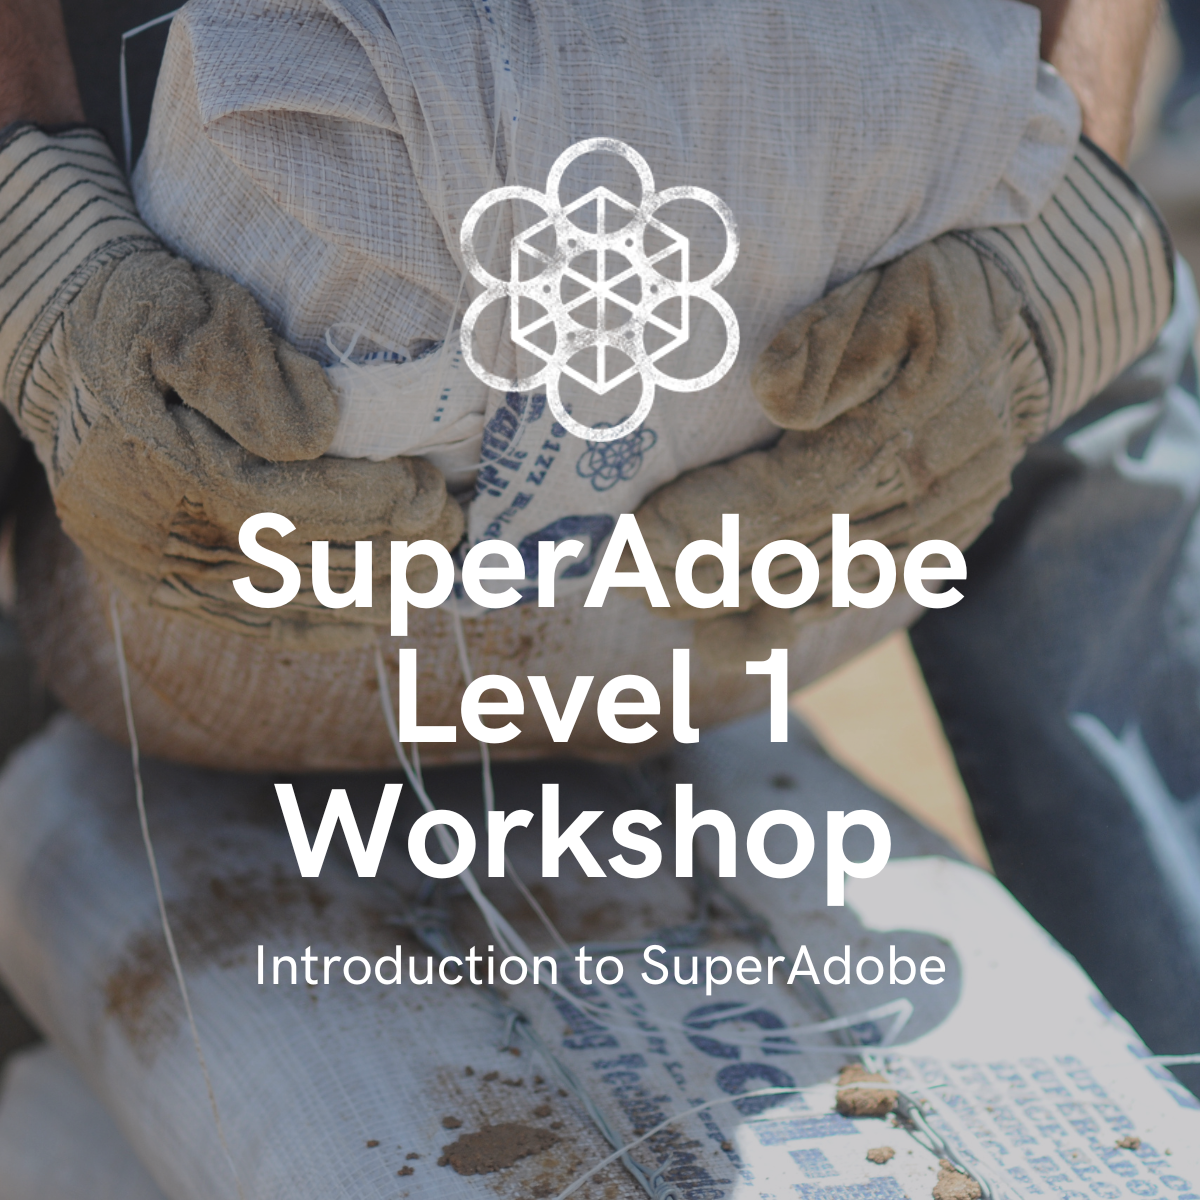 SuperAdobe Level 1 Workshop: Introduction